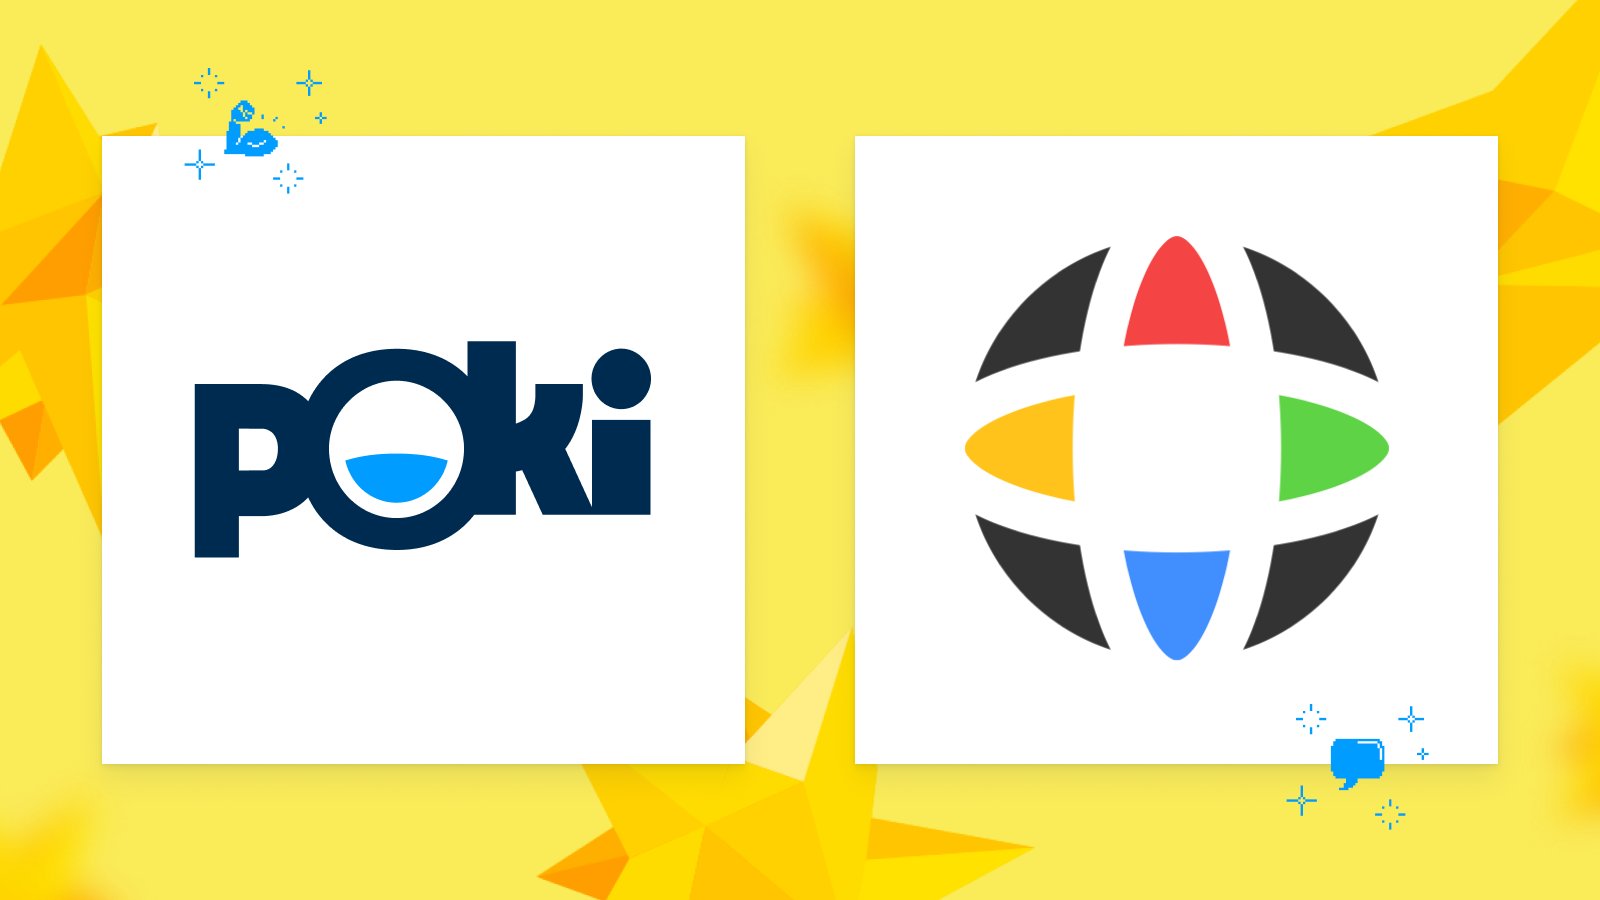 Introducing Poki Games: Your Gateway to Free Online Gaming